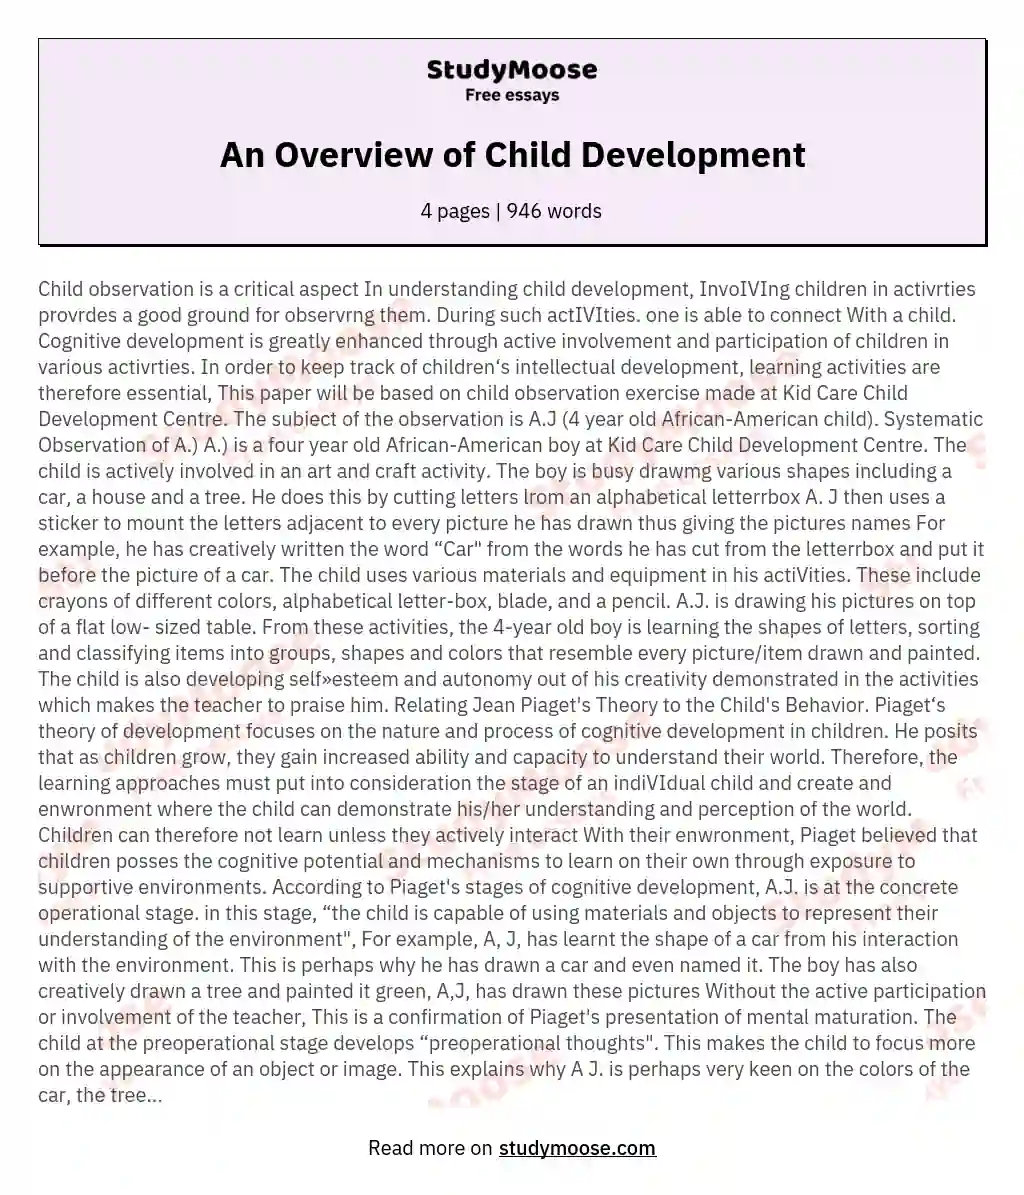 An Overview of Child Development essay